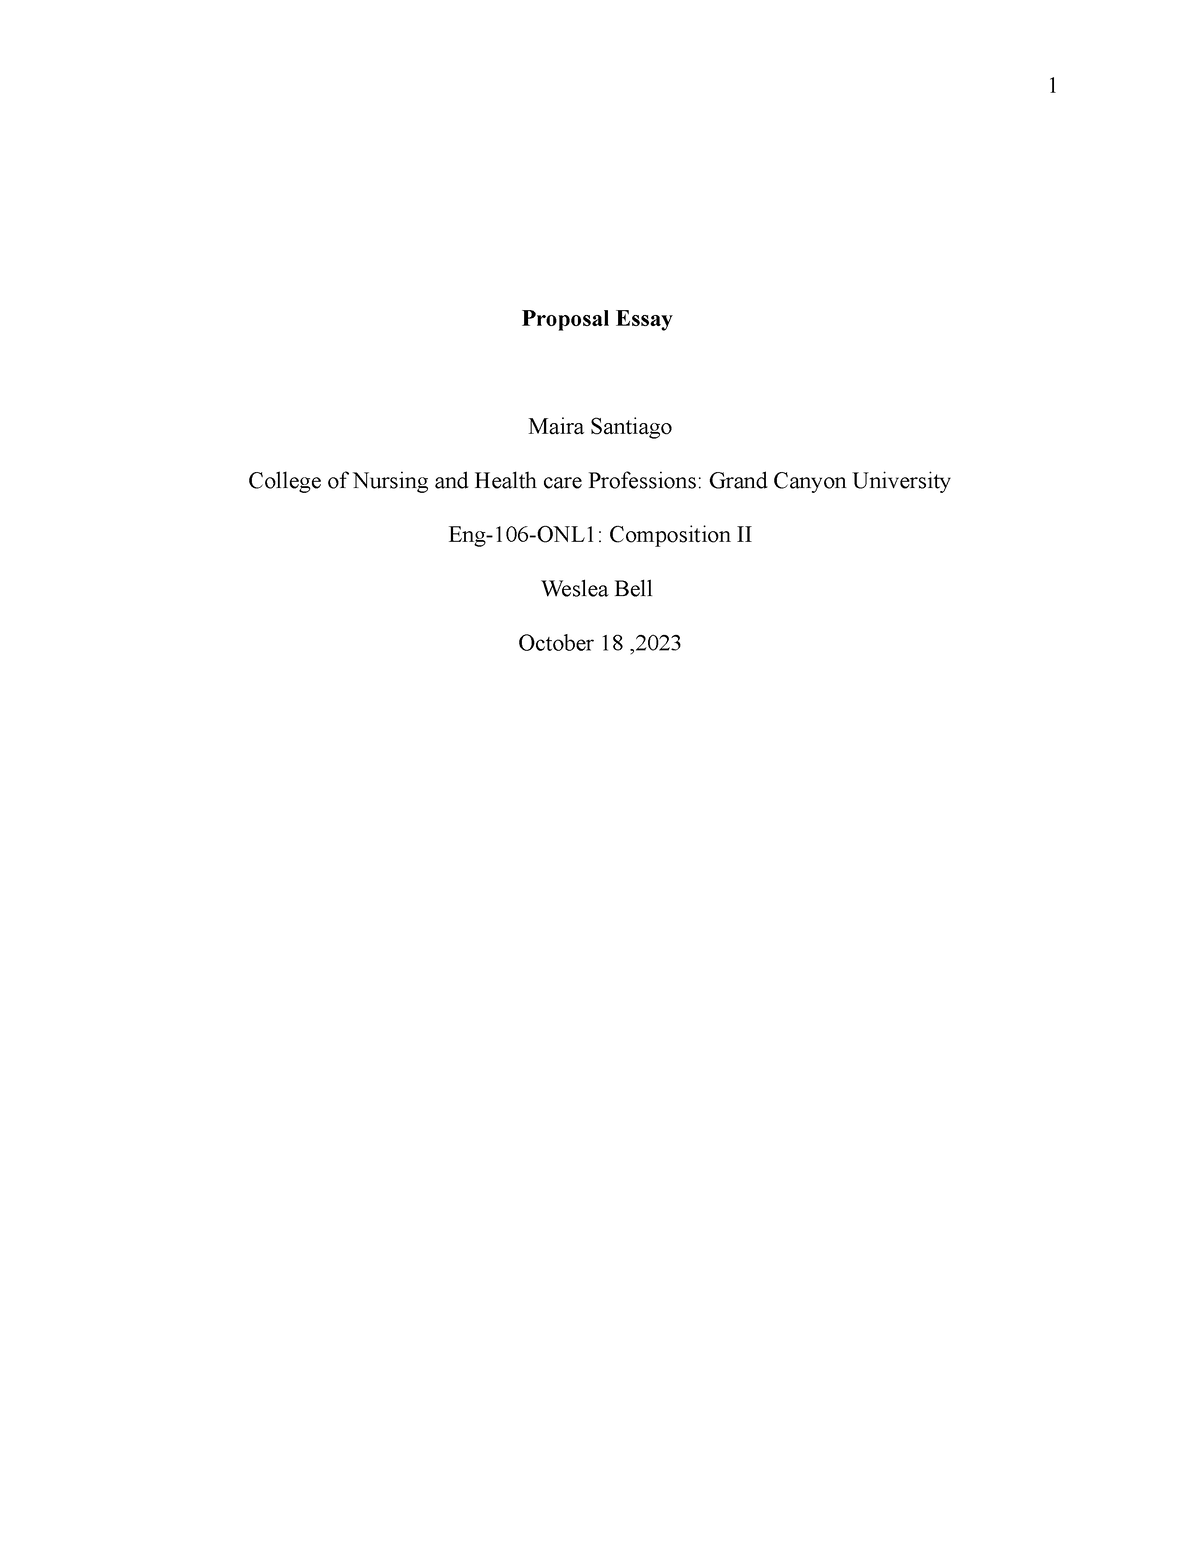 Proposal Essay - Proposal Essay Maira Santiago College of Nursing and ...